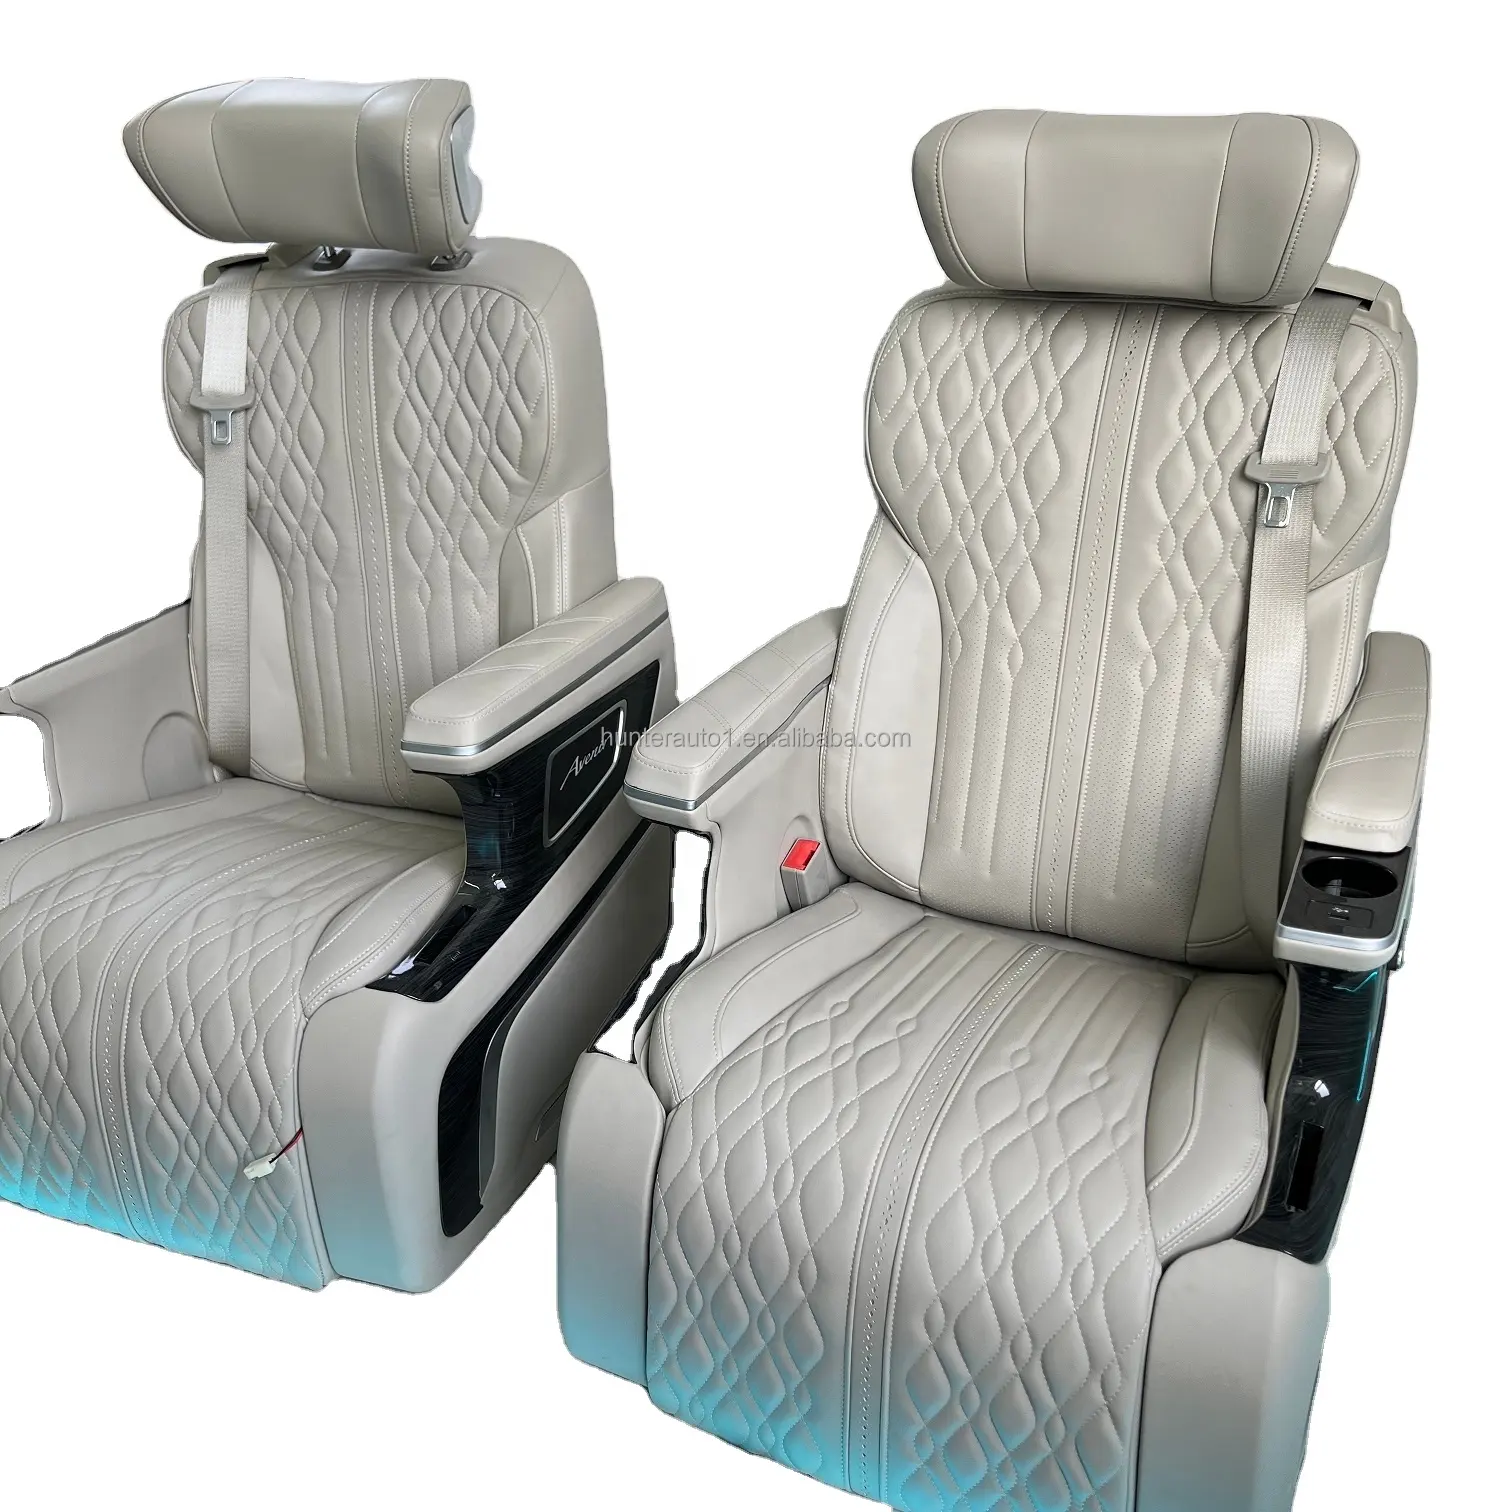 Seat Aero personalizado de lujo, Seat para Mercedes Benz, Vito, Metris, v-class, caravana, asiento de coche VIP, gran oferta